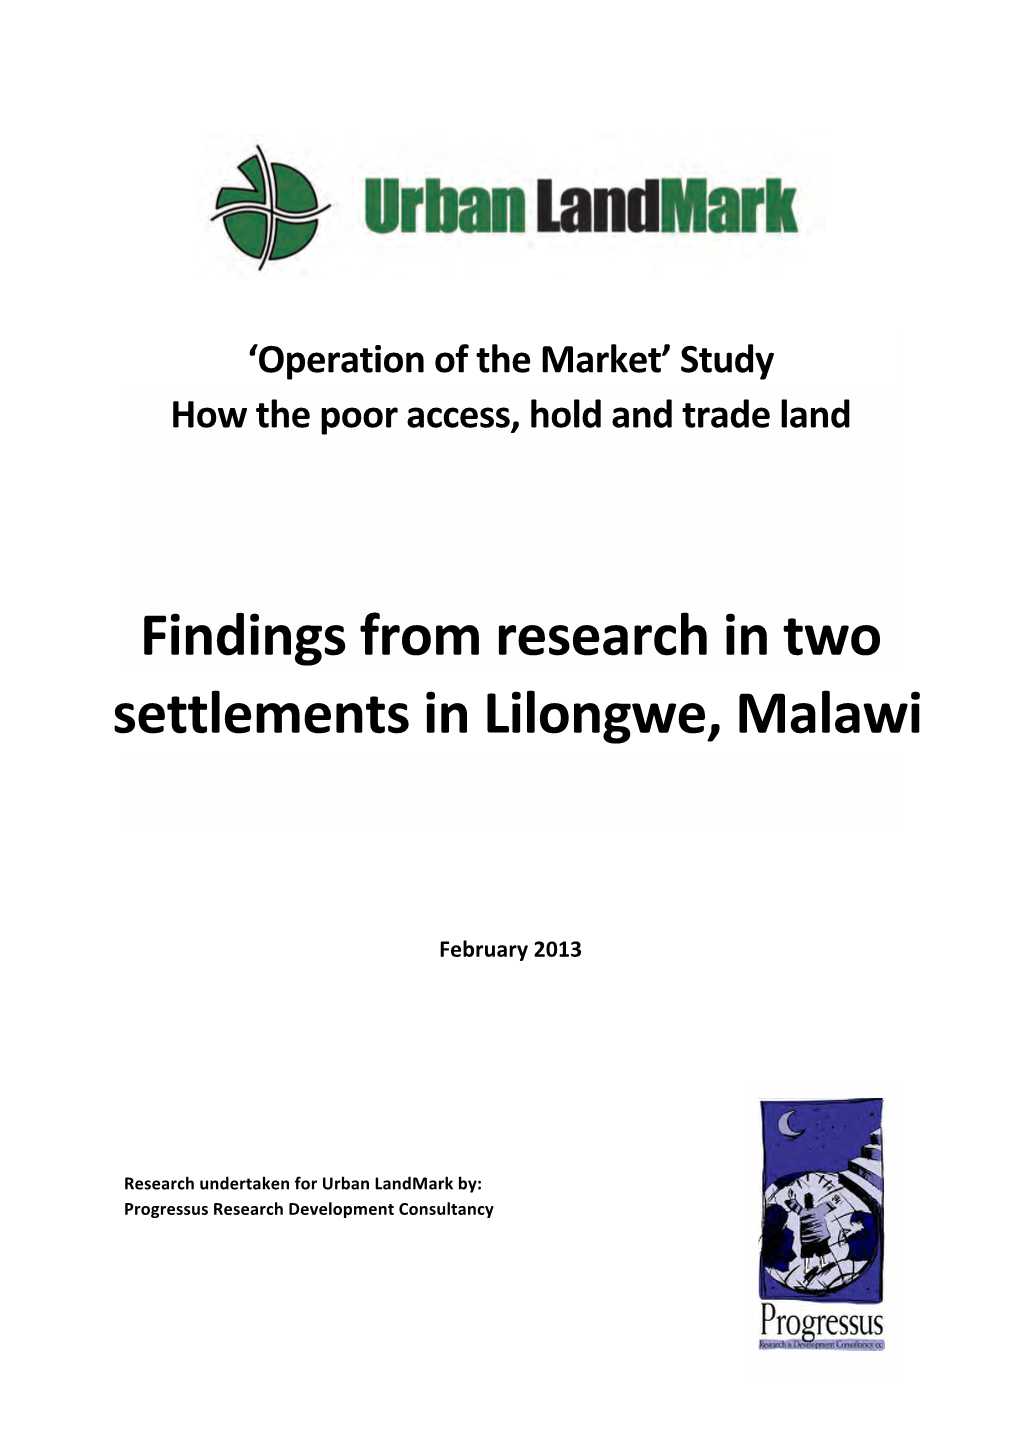 Findings from Research in Two Settlements in Lilongwe, Malawi